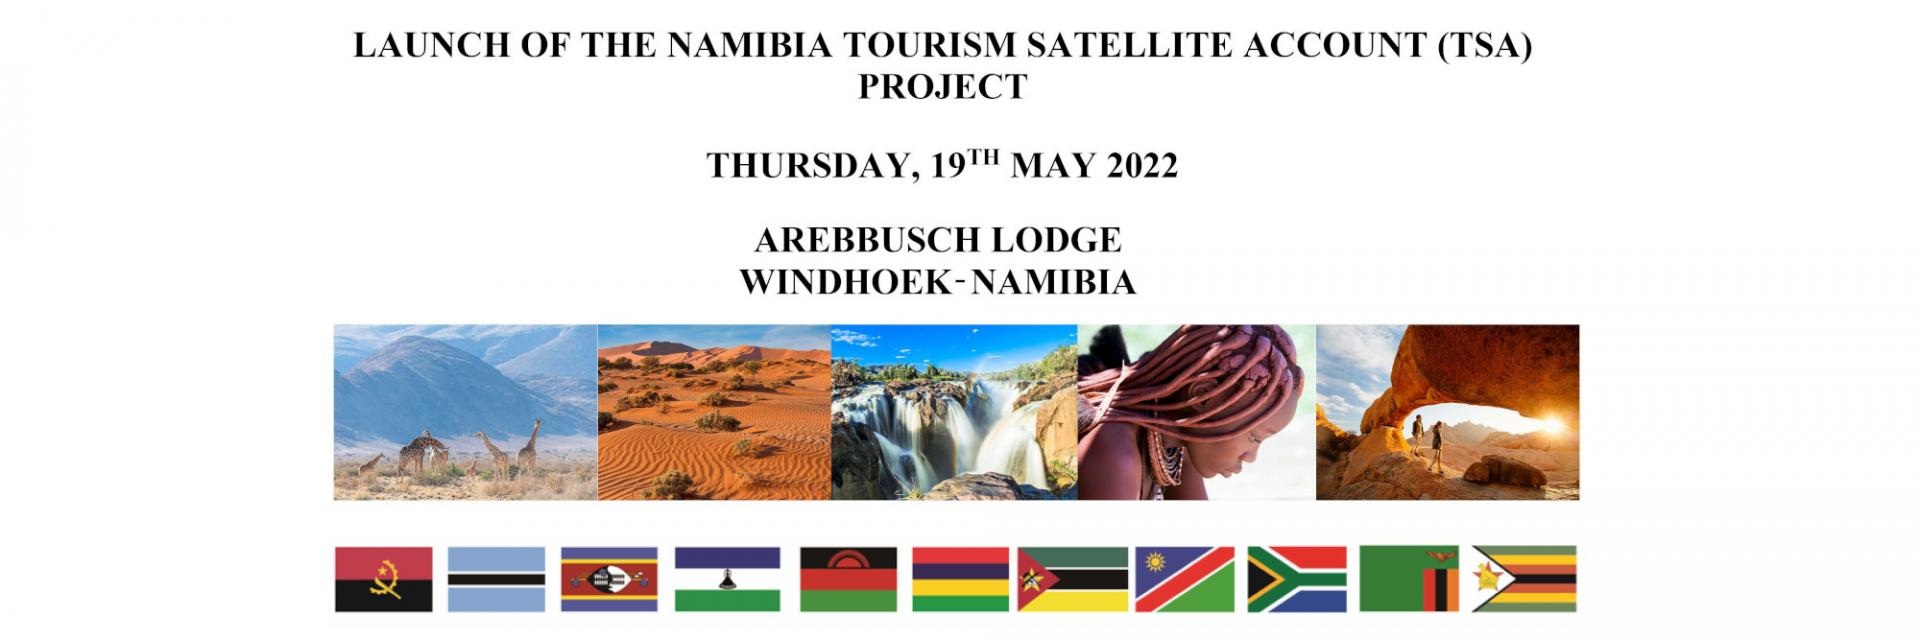 Launch of The Namibia Tourism Satellite Account (TSA) Project